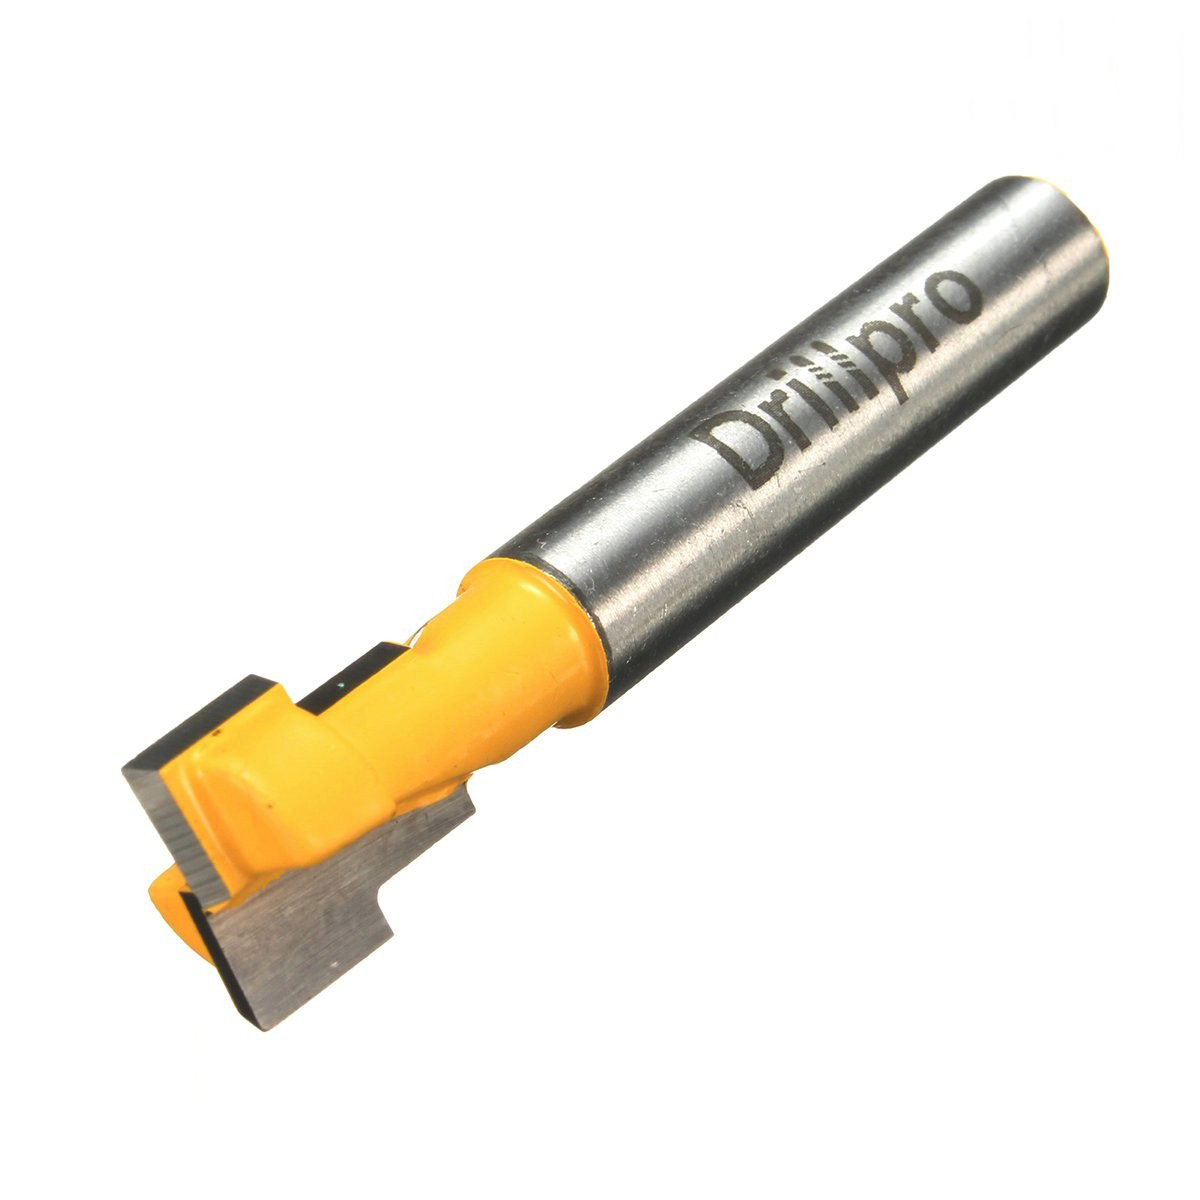 Drillpro T-Slot Cutter 1/4' x 3/8' Screw Key Hole Cut Woodworking Router Bit 1/4' Shank